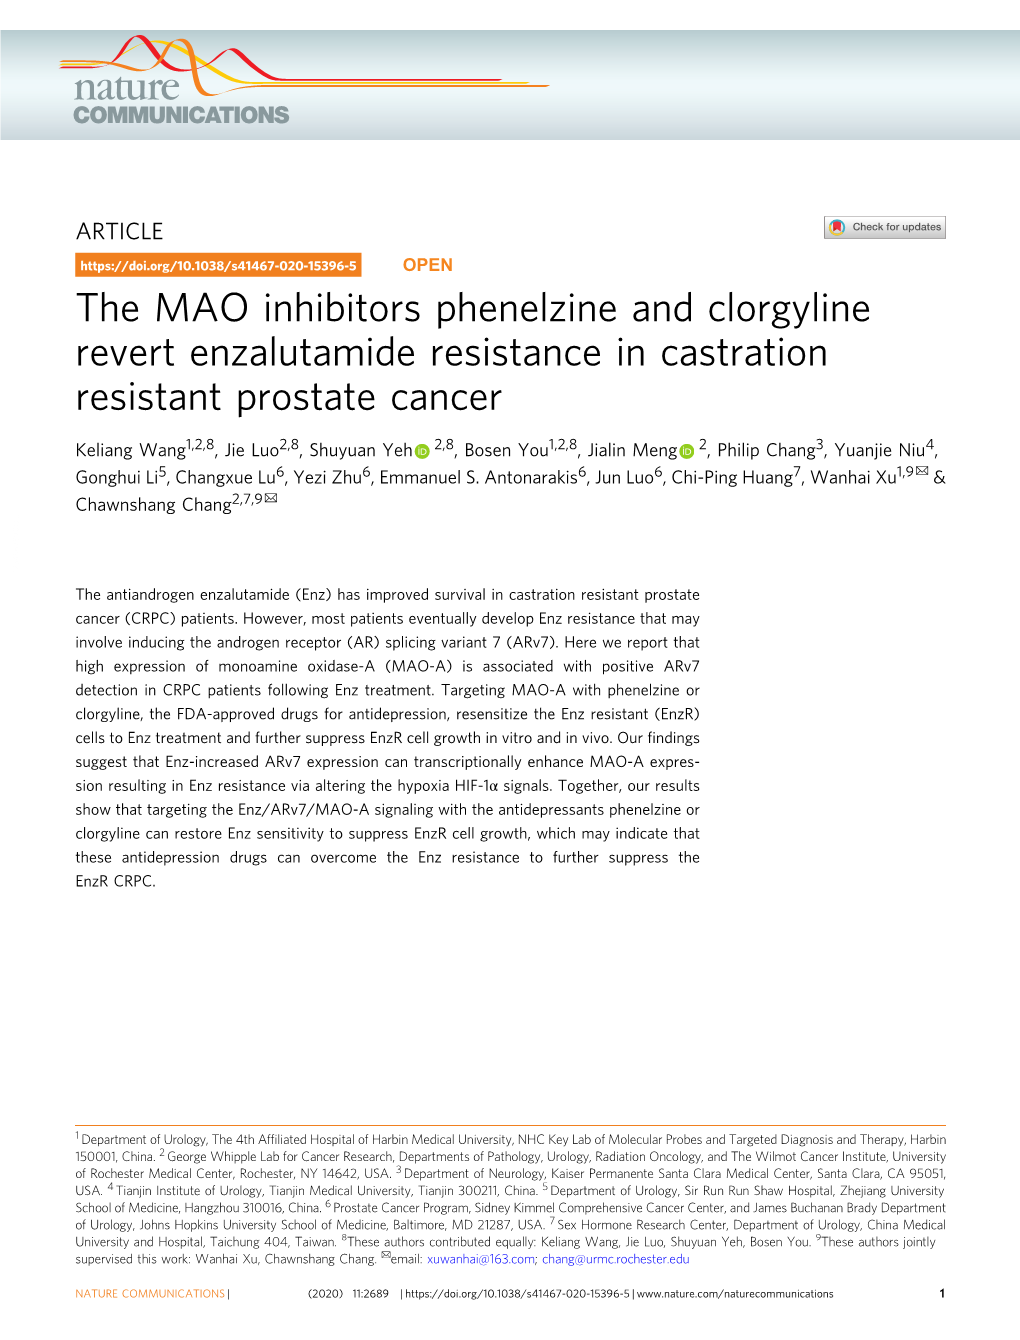 The MAO Inhibitors Phenelzine and Clorgyline Revert Enzalutamide Resistance in Castration Resistant Prostate Cancer